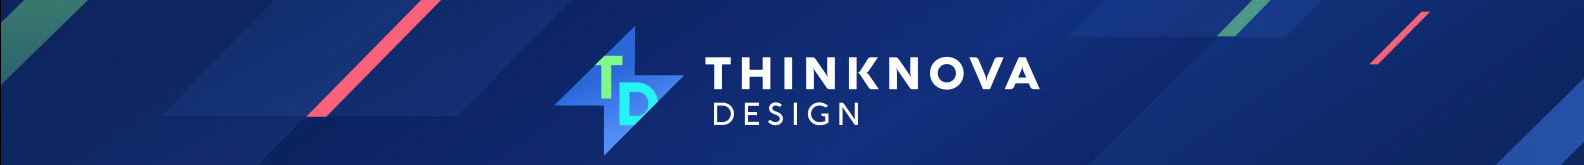 Thinknova Design's profile banner